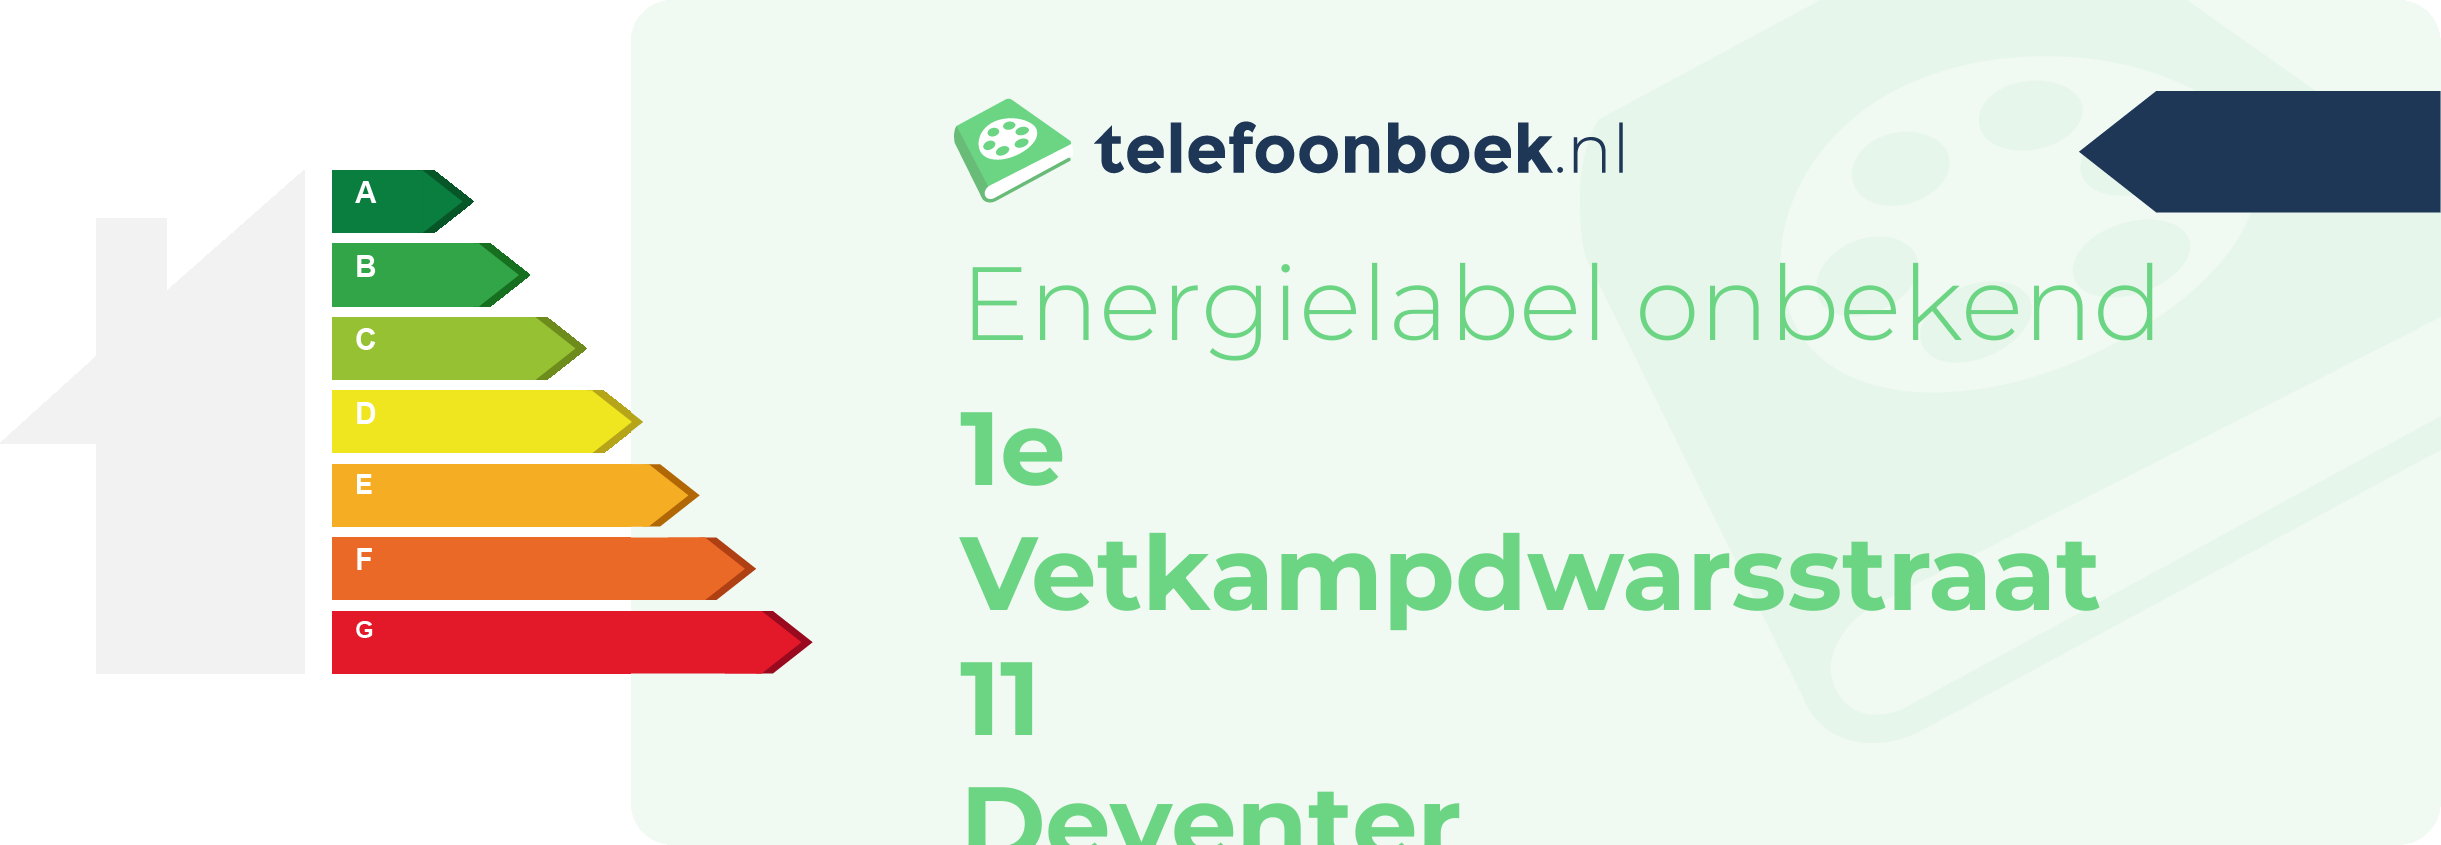 Energielabel 1e Vetkampdwarsstraat 11 Deventer